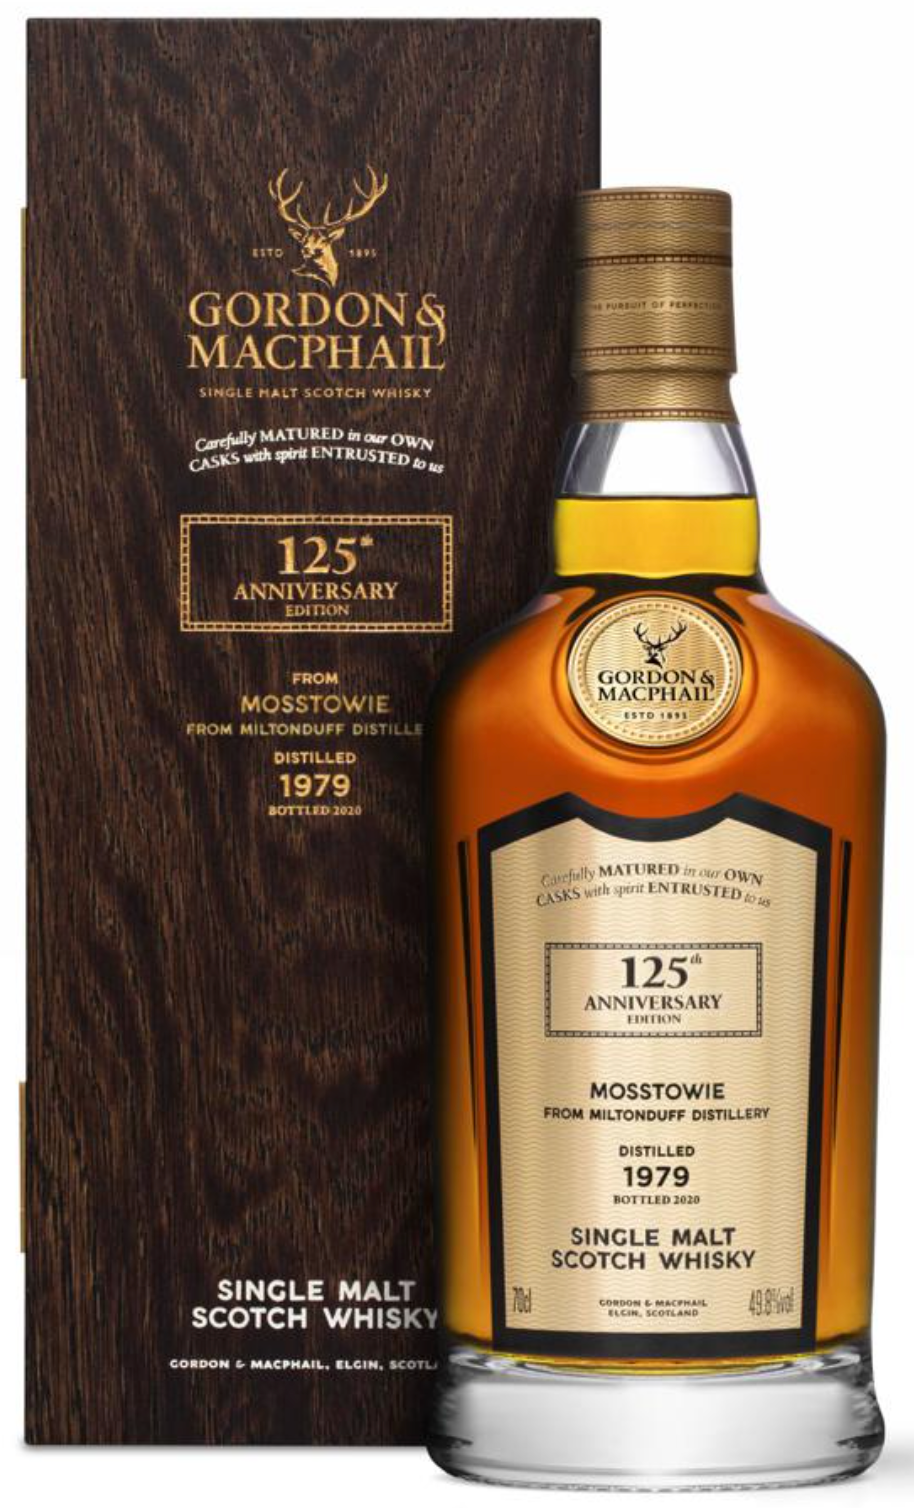 Gordon & Macphail Mosstowie Aged 40 Years Distilled 1979 125th Anniversary Edition Single Malt Scotch Whiskey 750ml-0